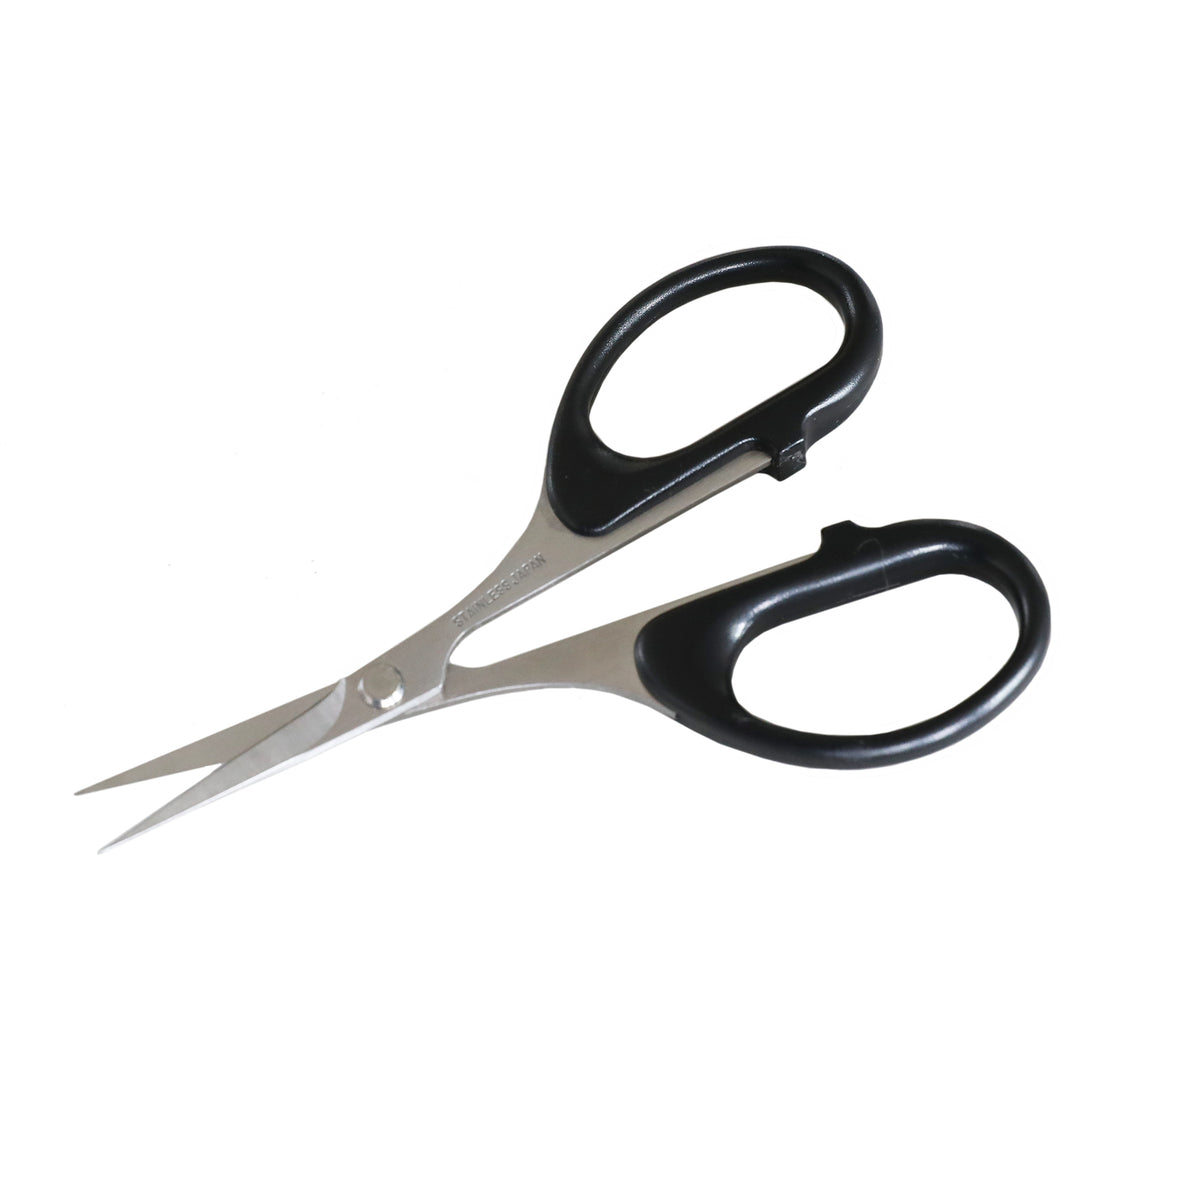 Economy Japanese Style Thread Nippers/Scissors